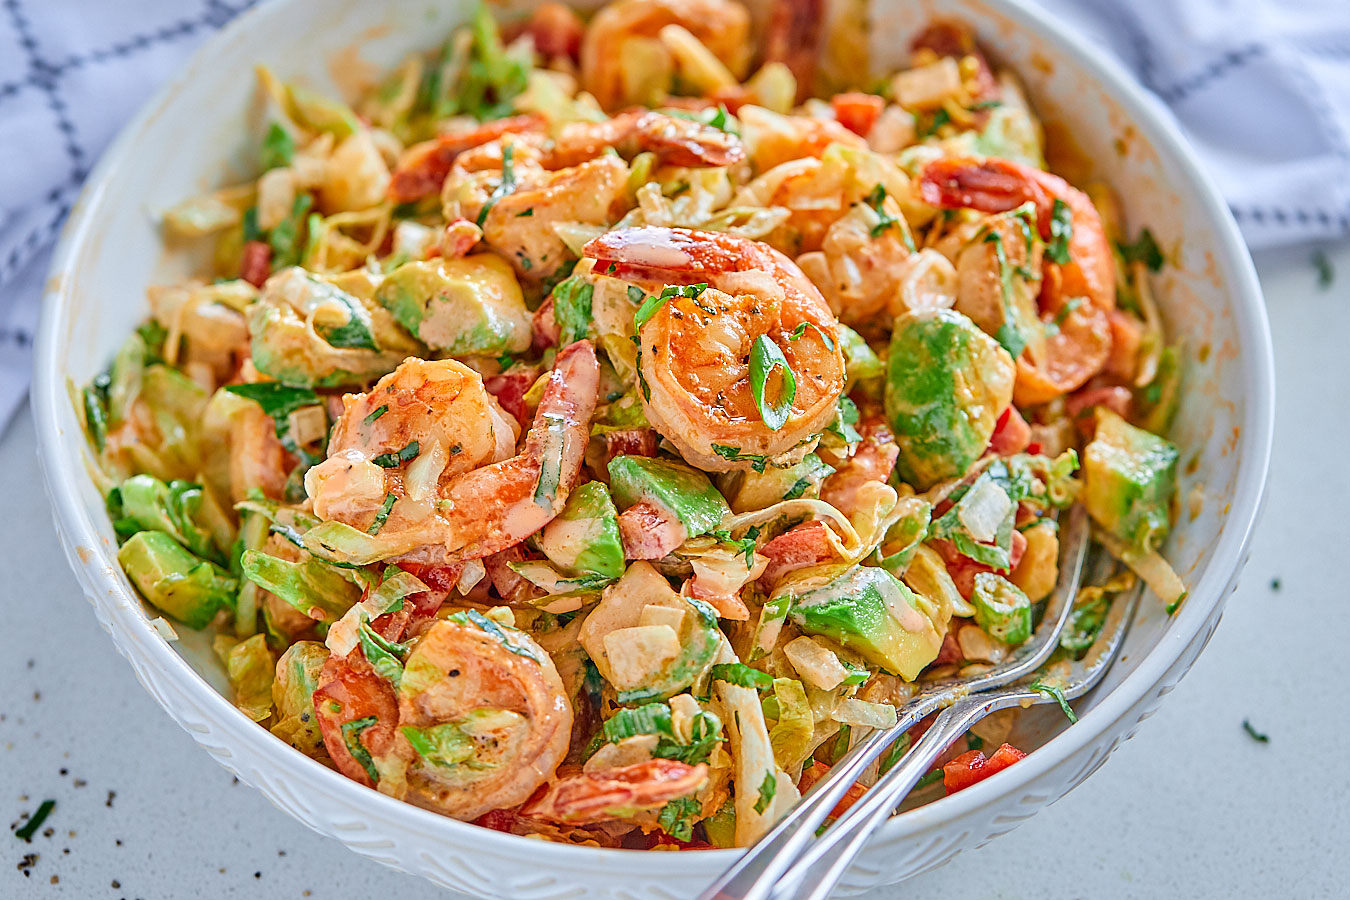 https://www.eatwell101.com/wp-content/uploads/2019/05/lettuce-shrimp-avocado-salad-healthy.jpg